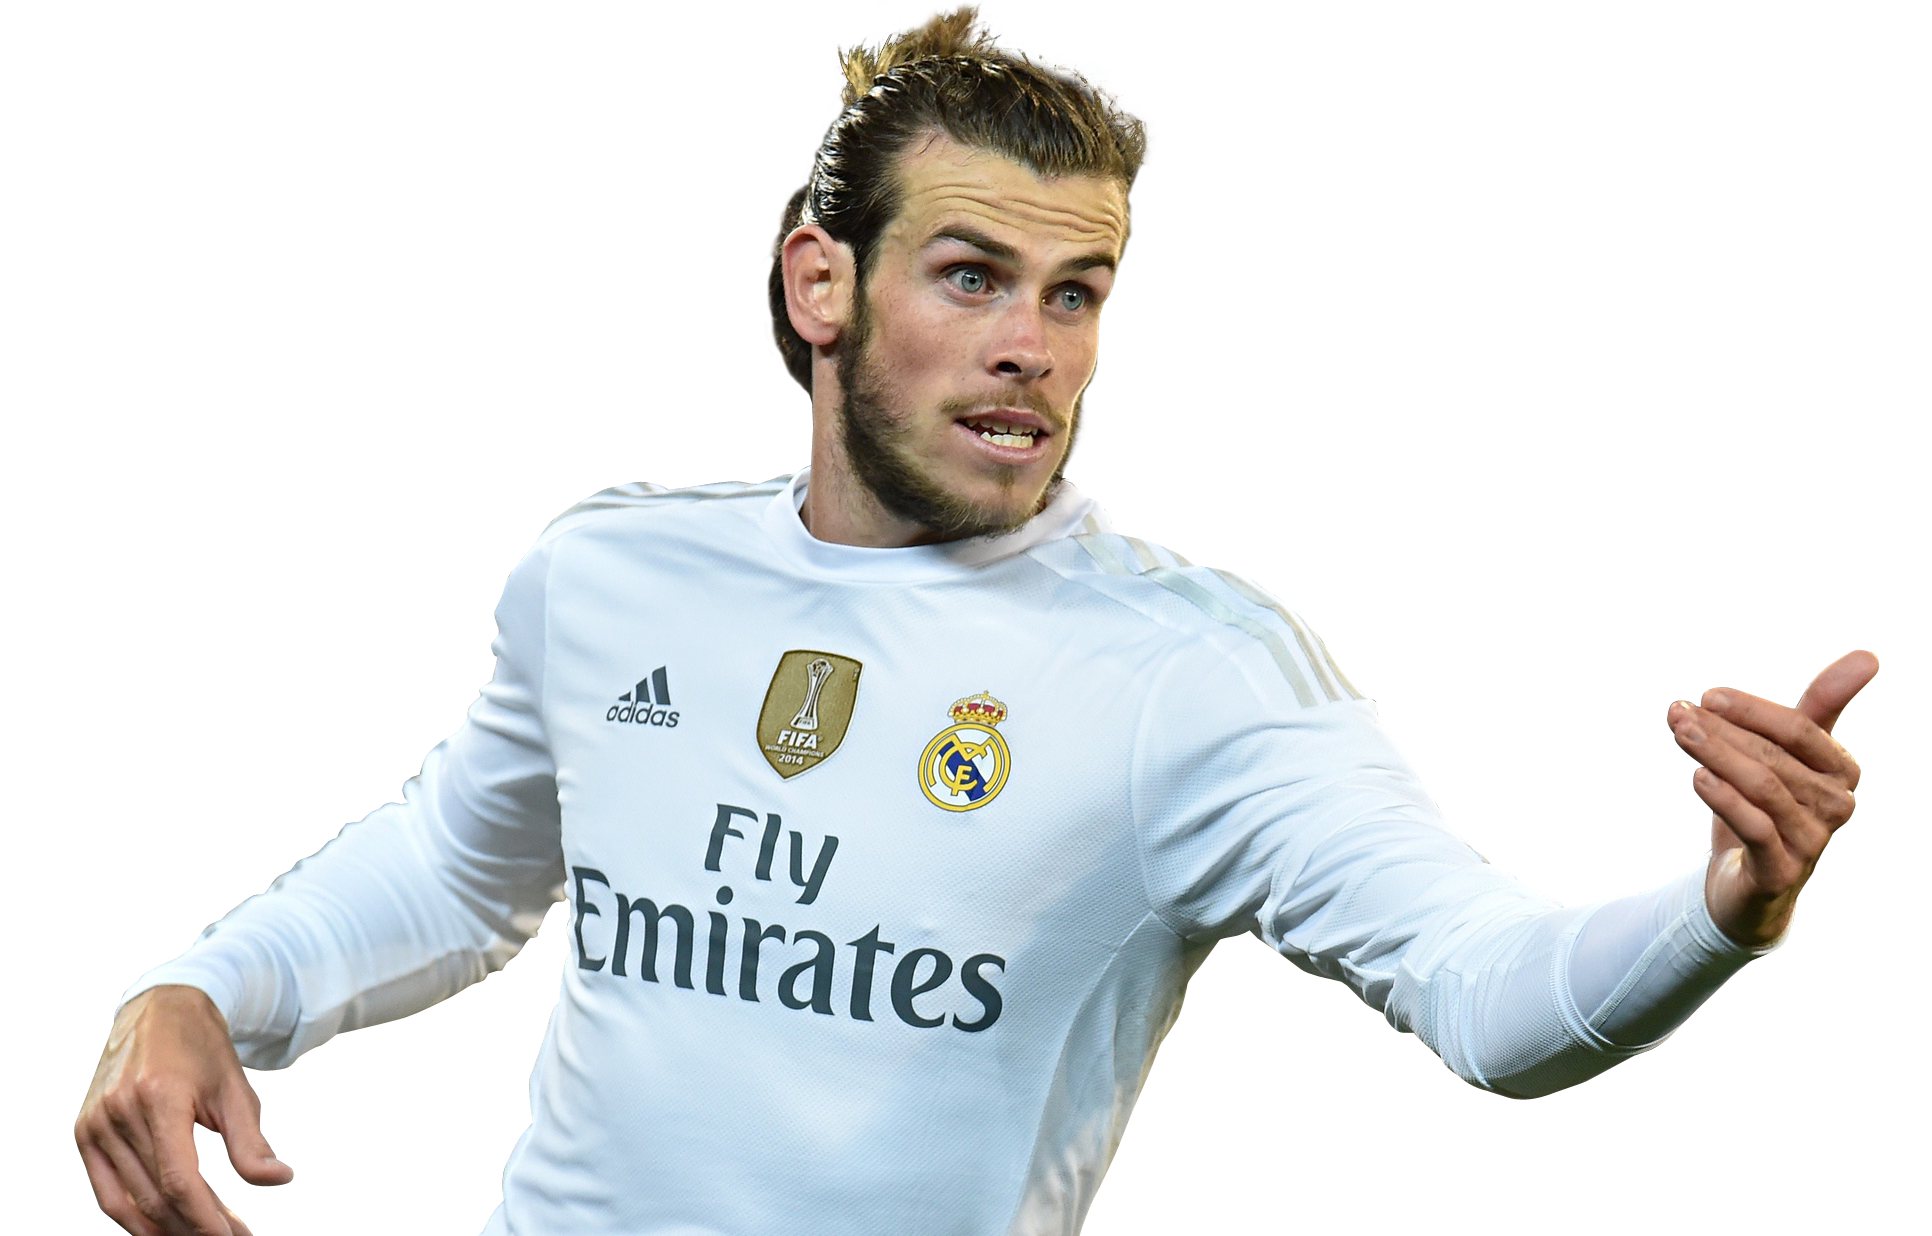 Bale Footballer Gareth PNG Image High Quality PNG Image